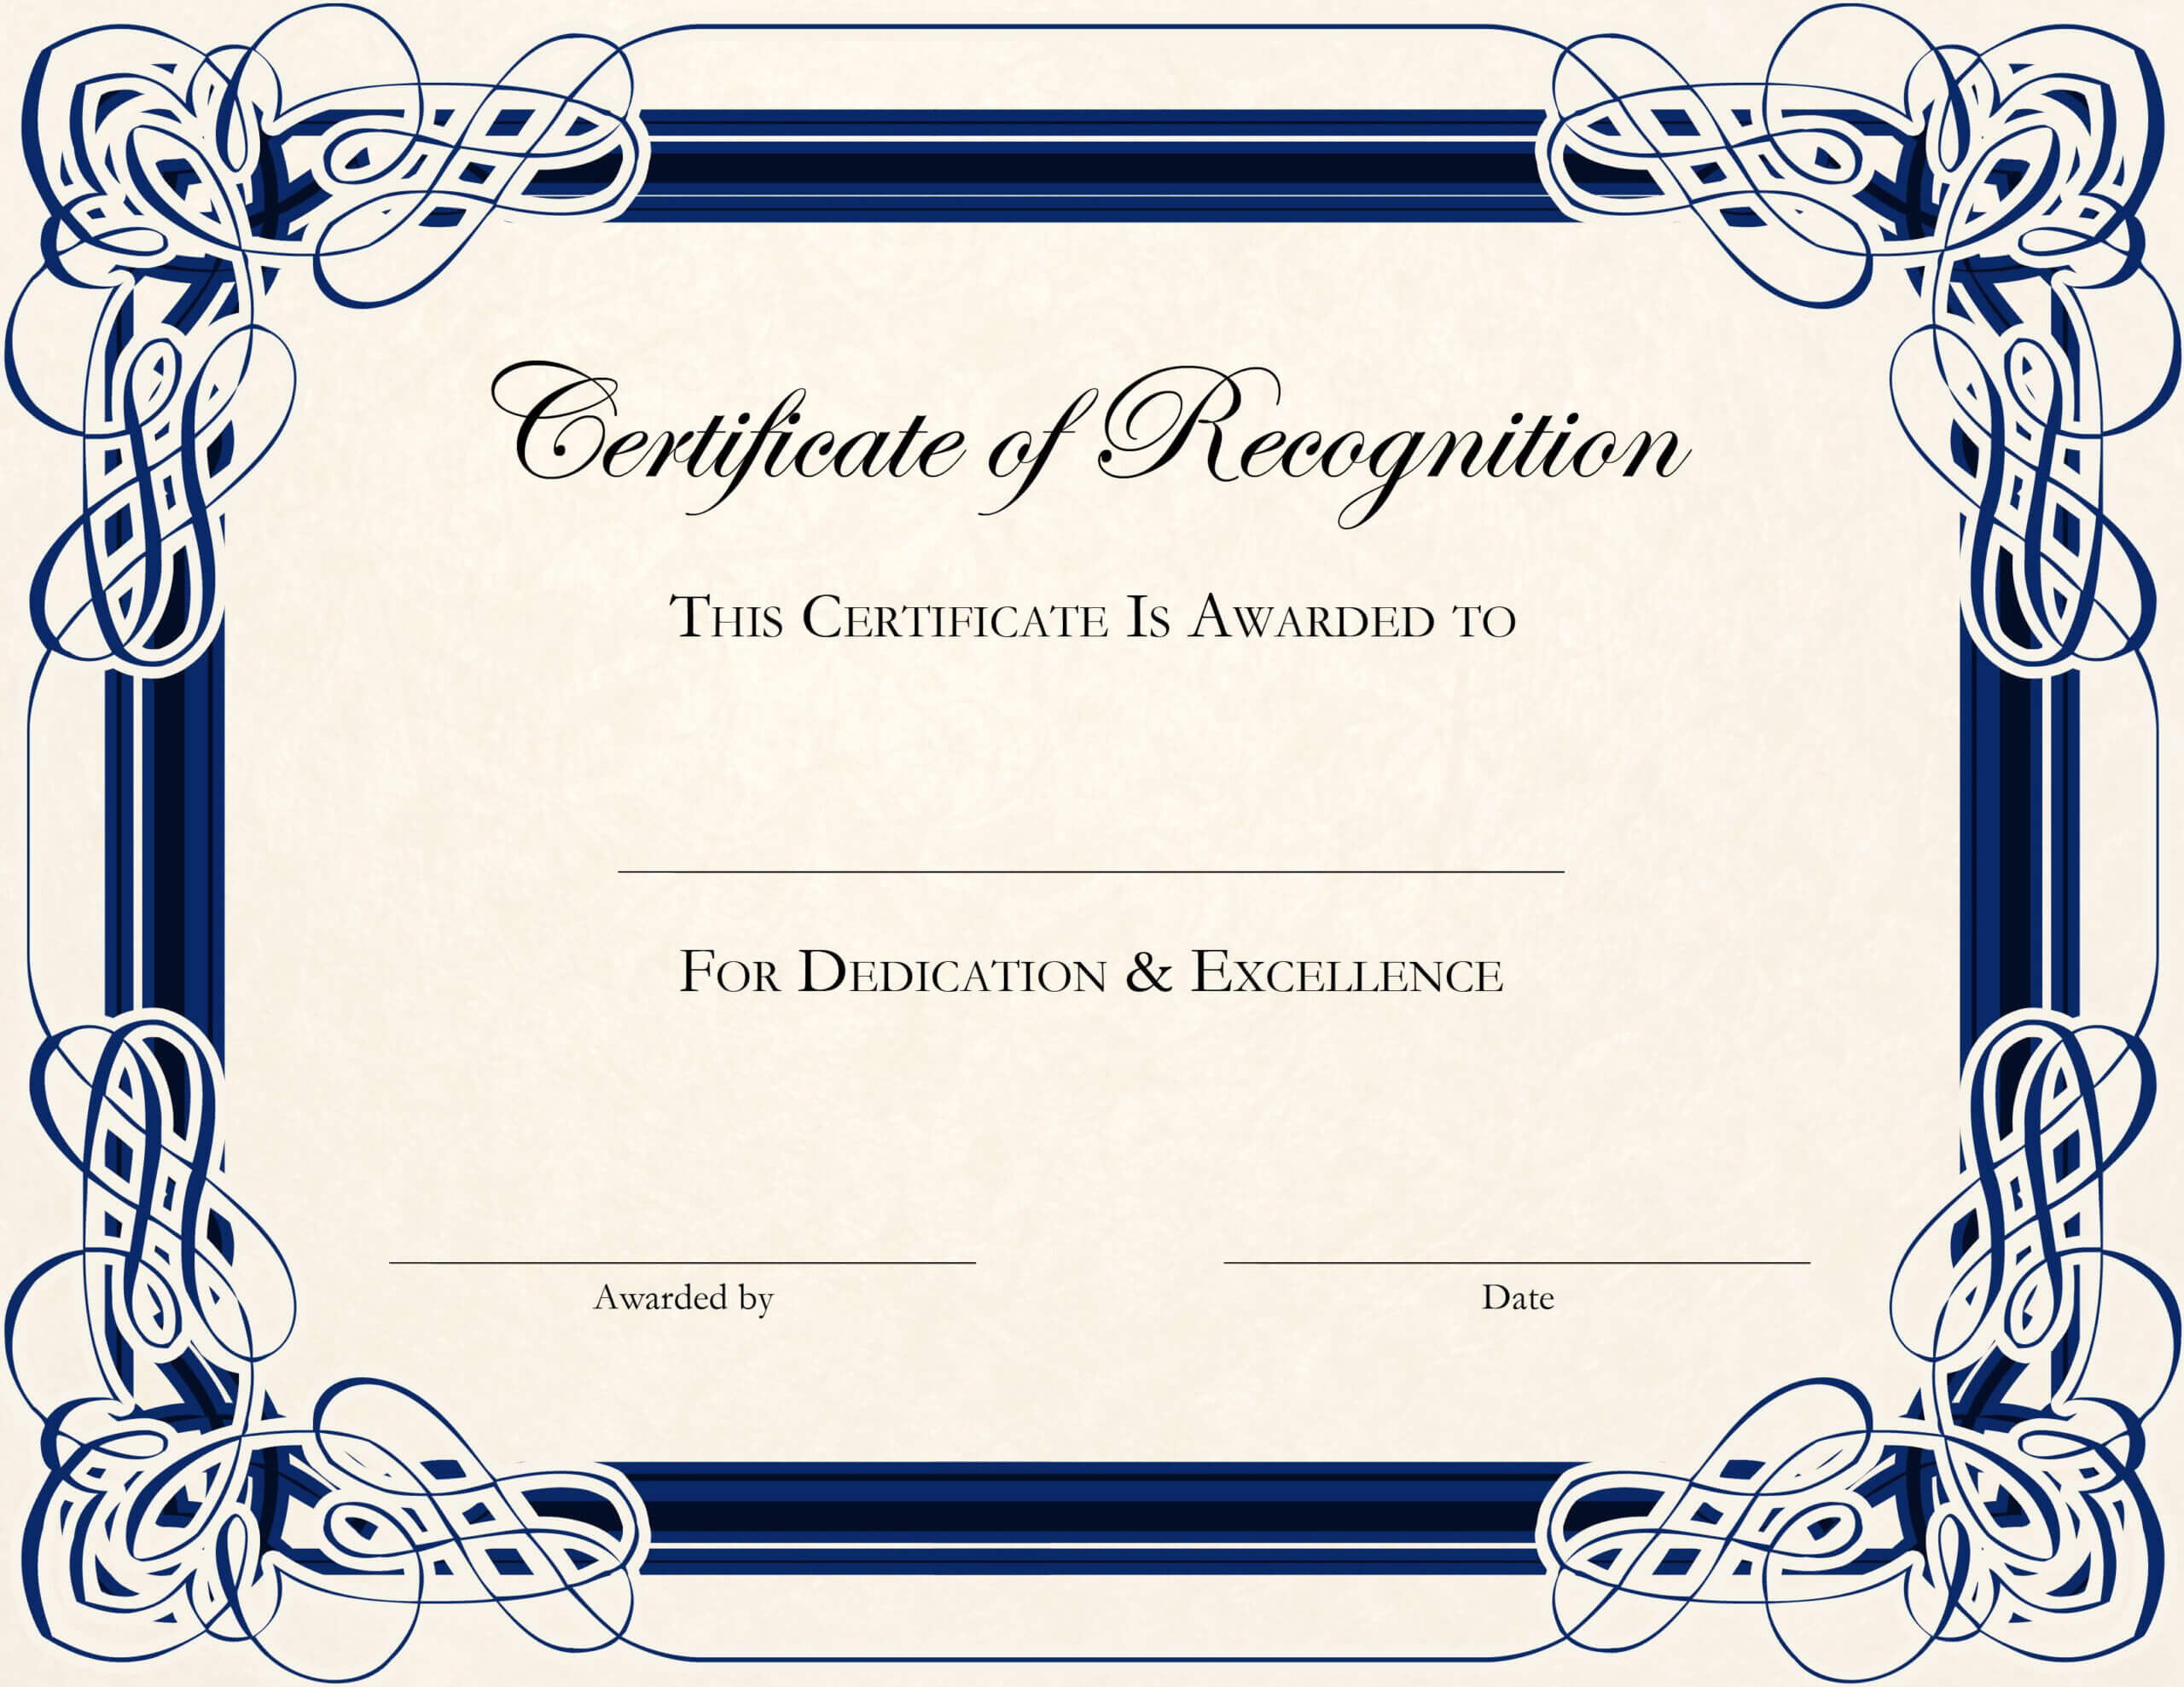 Certificate Template Designs Recognition Docs | Certificate Throughout Certificate Of Appreciation Template Doc